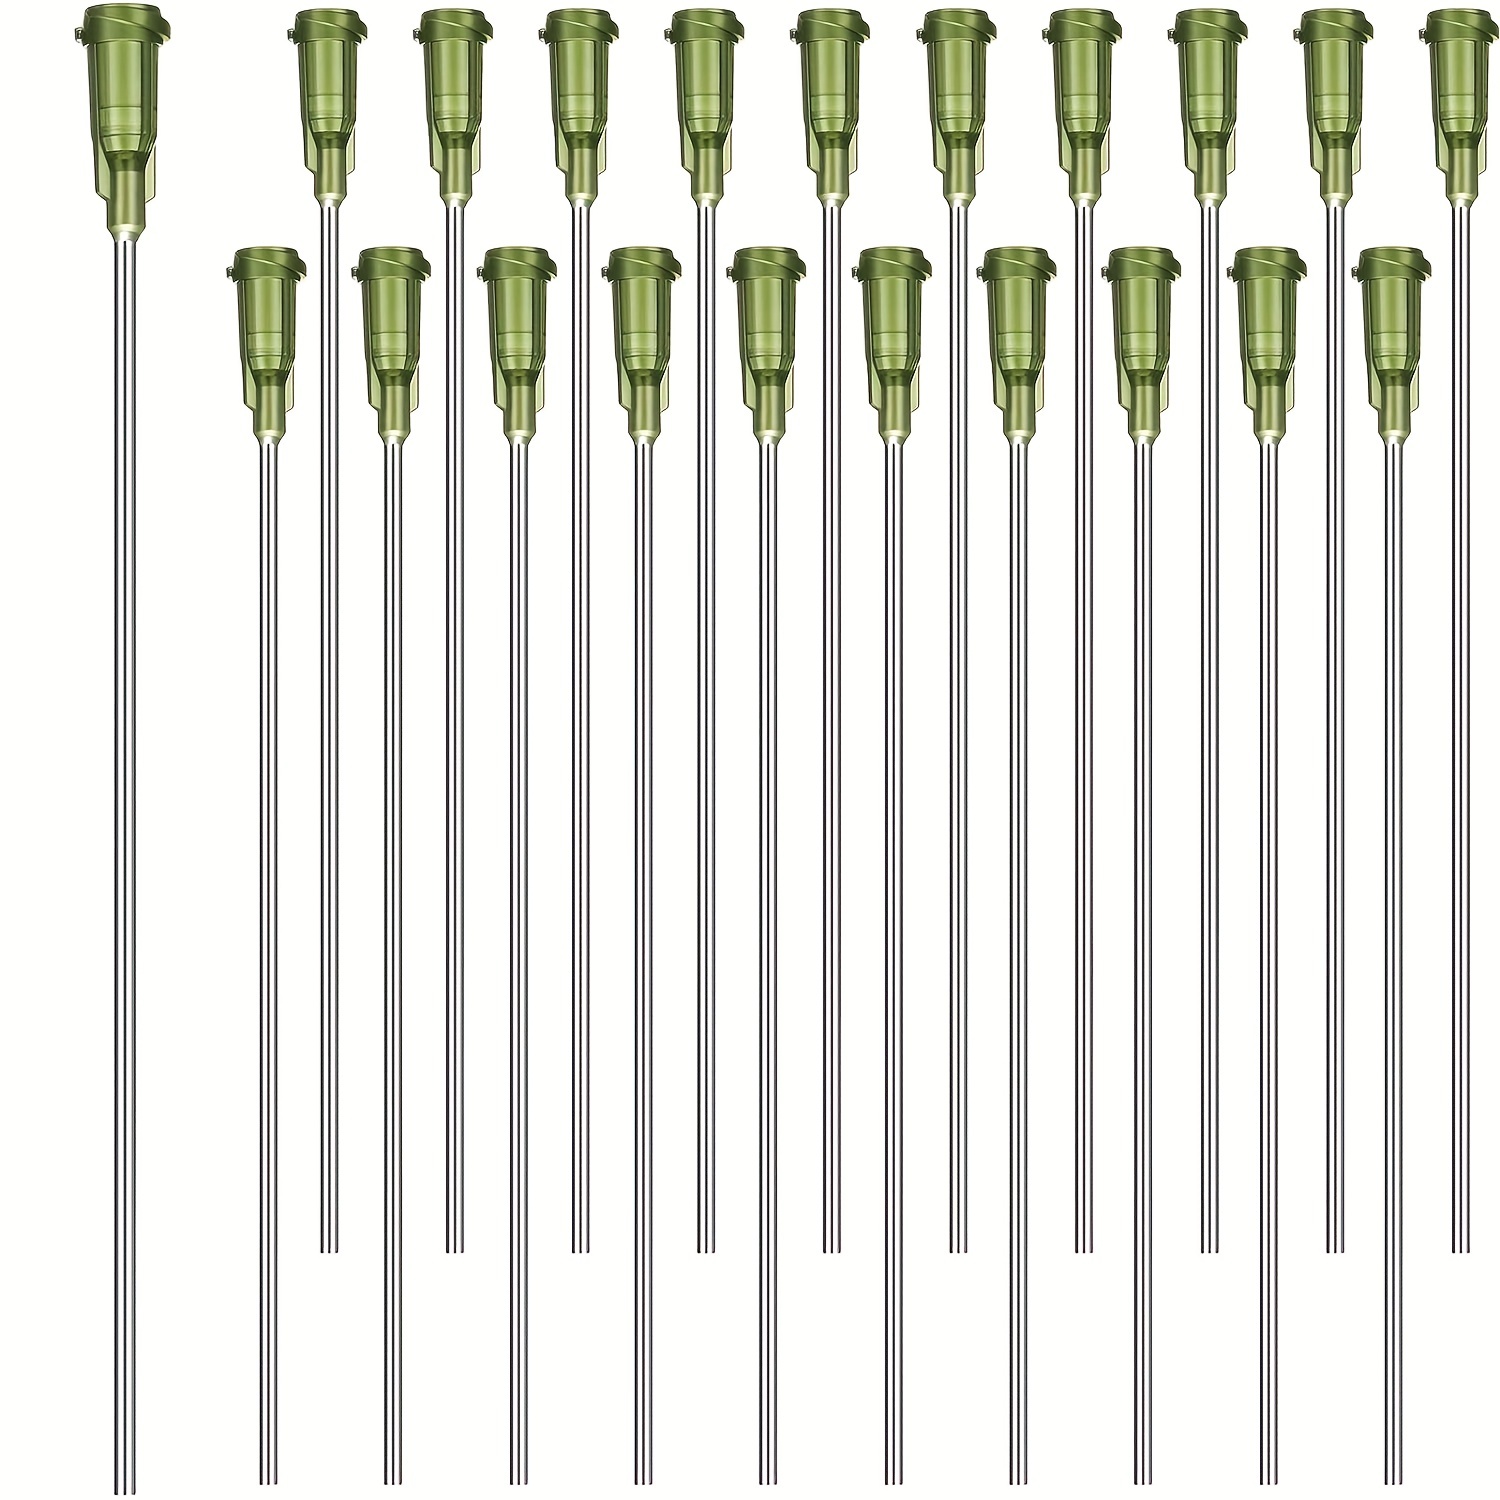 18 Ga 1 Inch Blunt Tip Dispensing Needle with Luer Lock,Precision  Applicator(Green,50 Pcs)